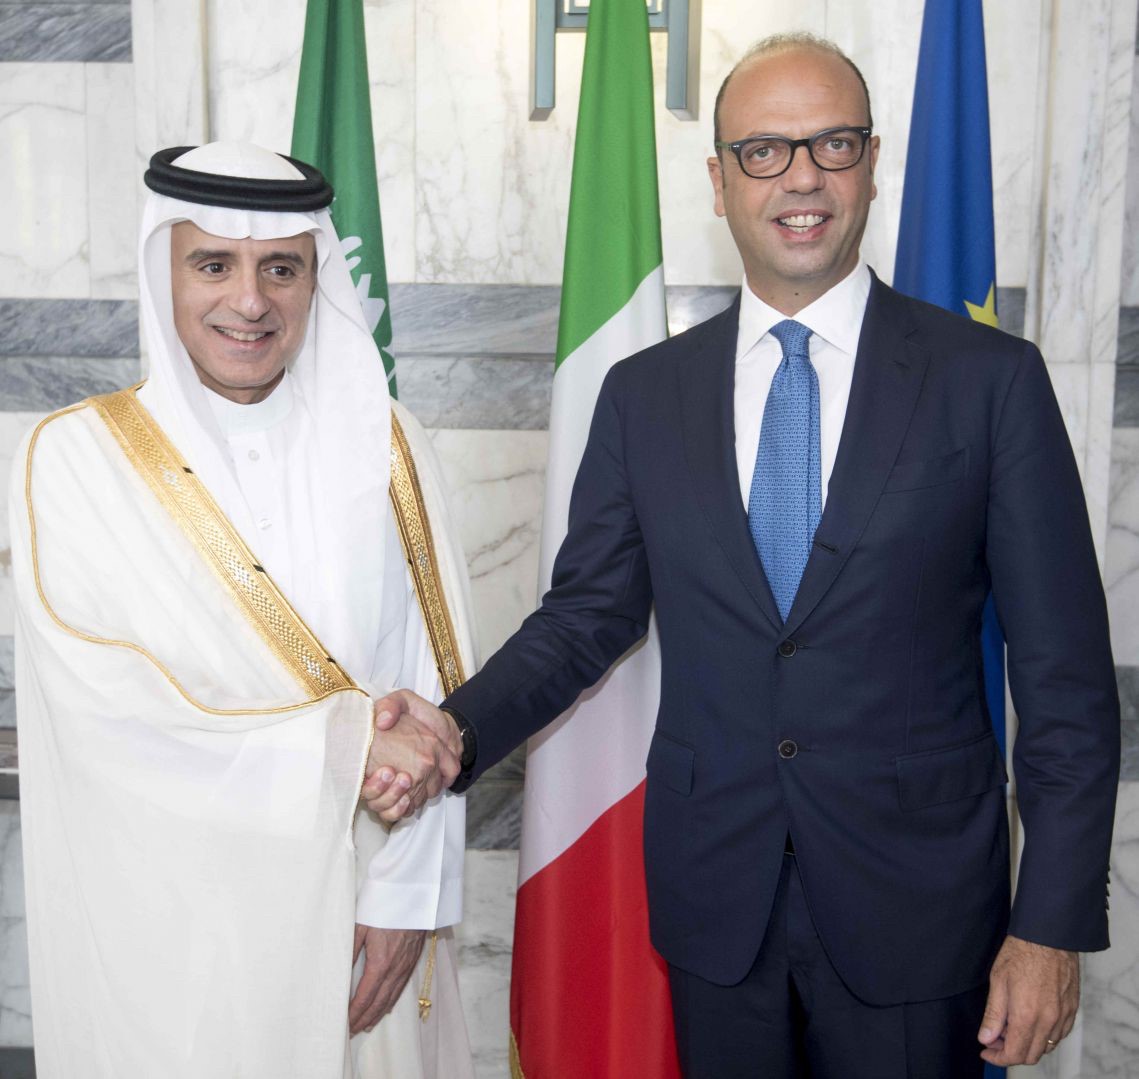 Saudi Foreign Minister Adel Al-Jubair with the Italian counterpart Angelino Alfano